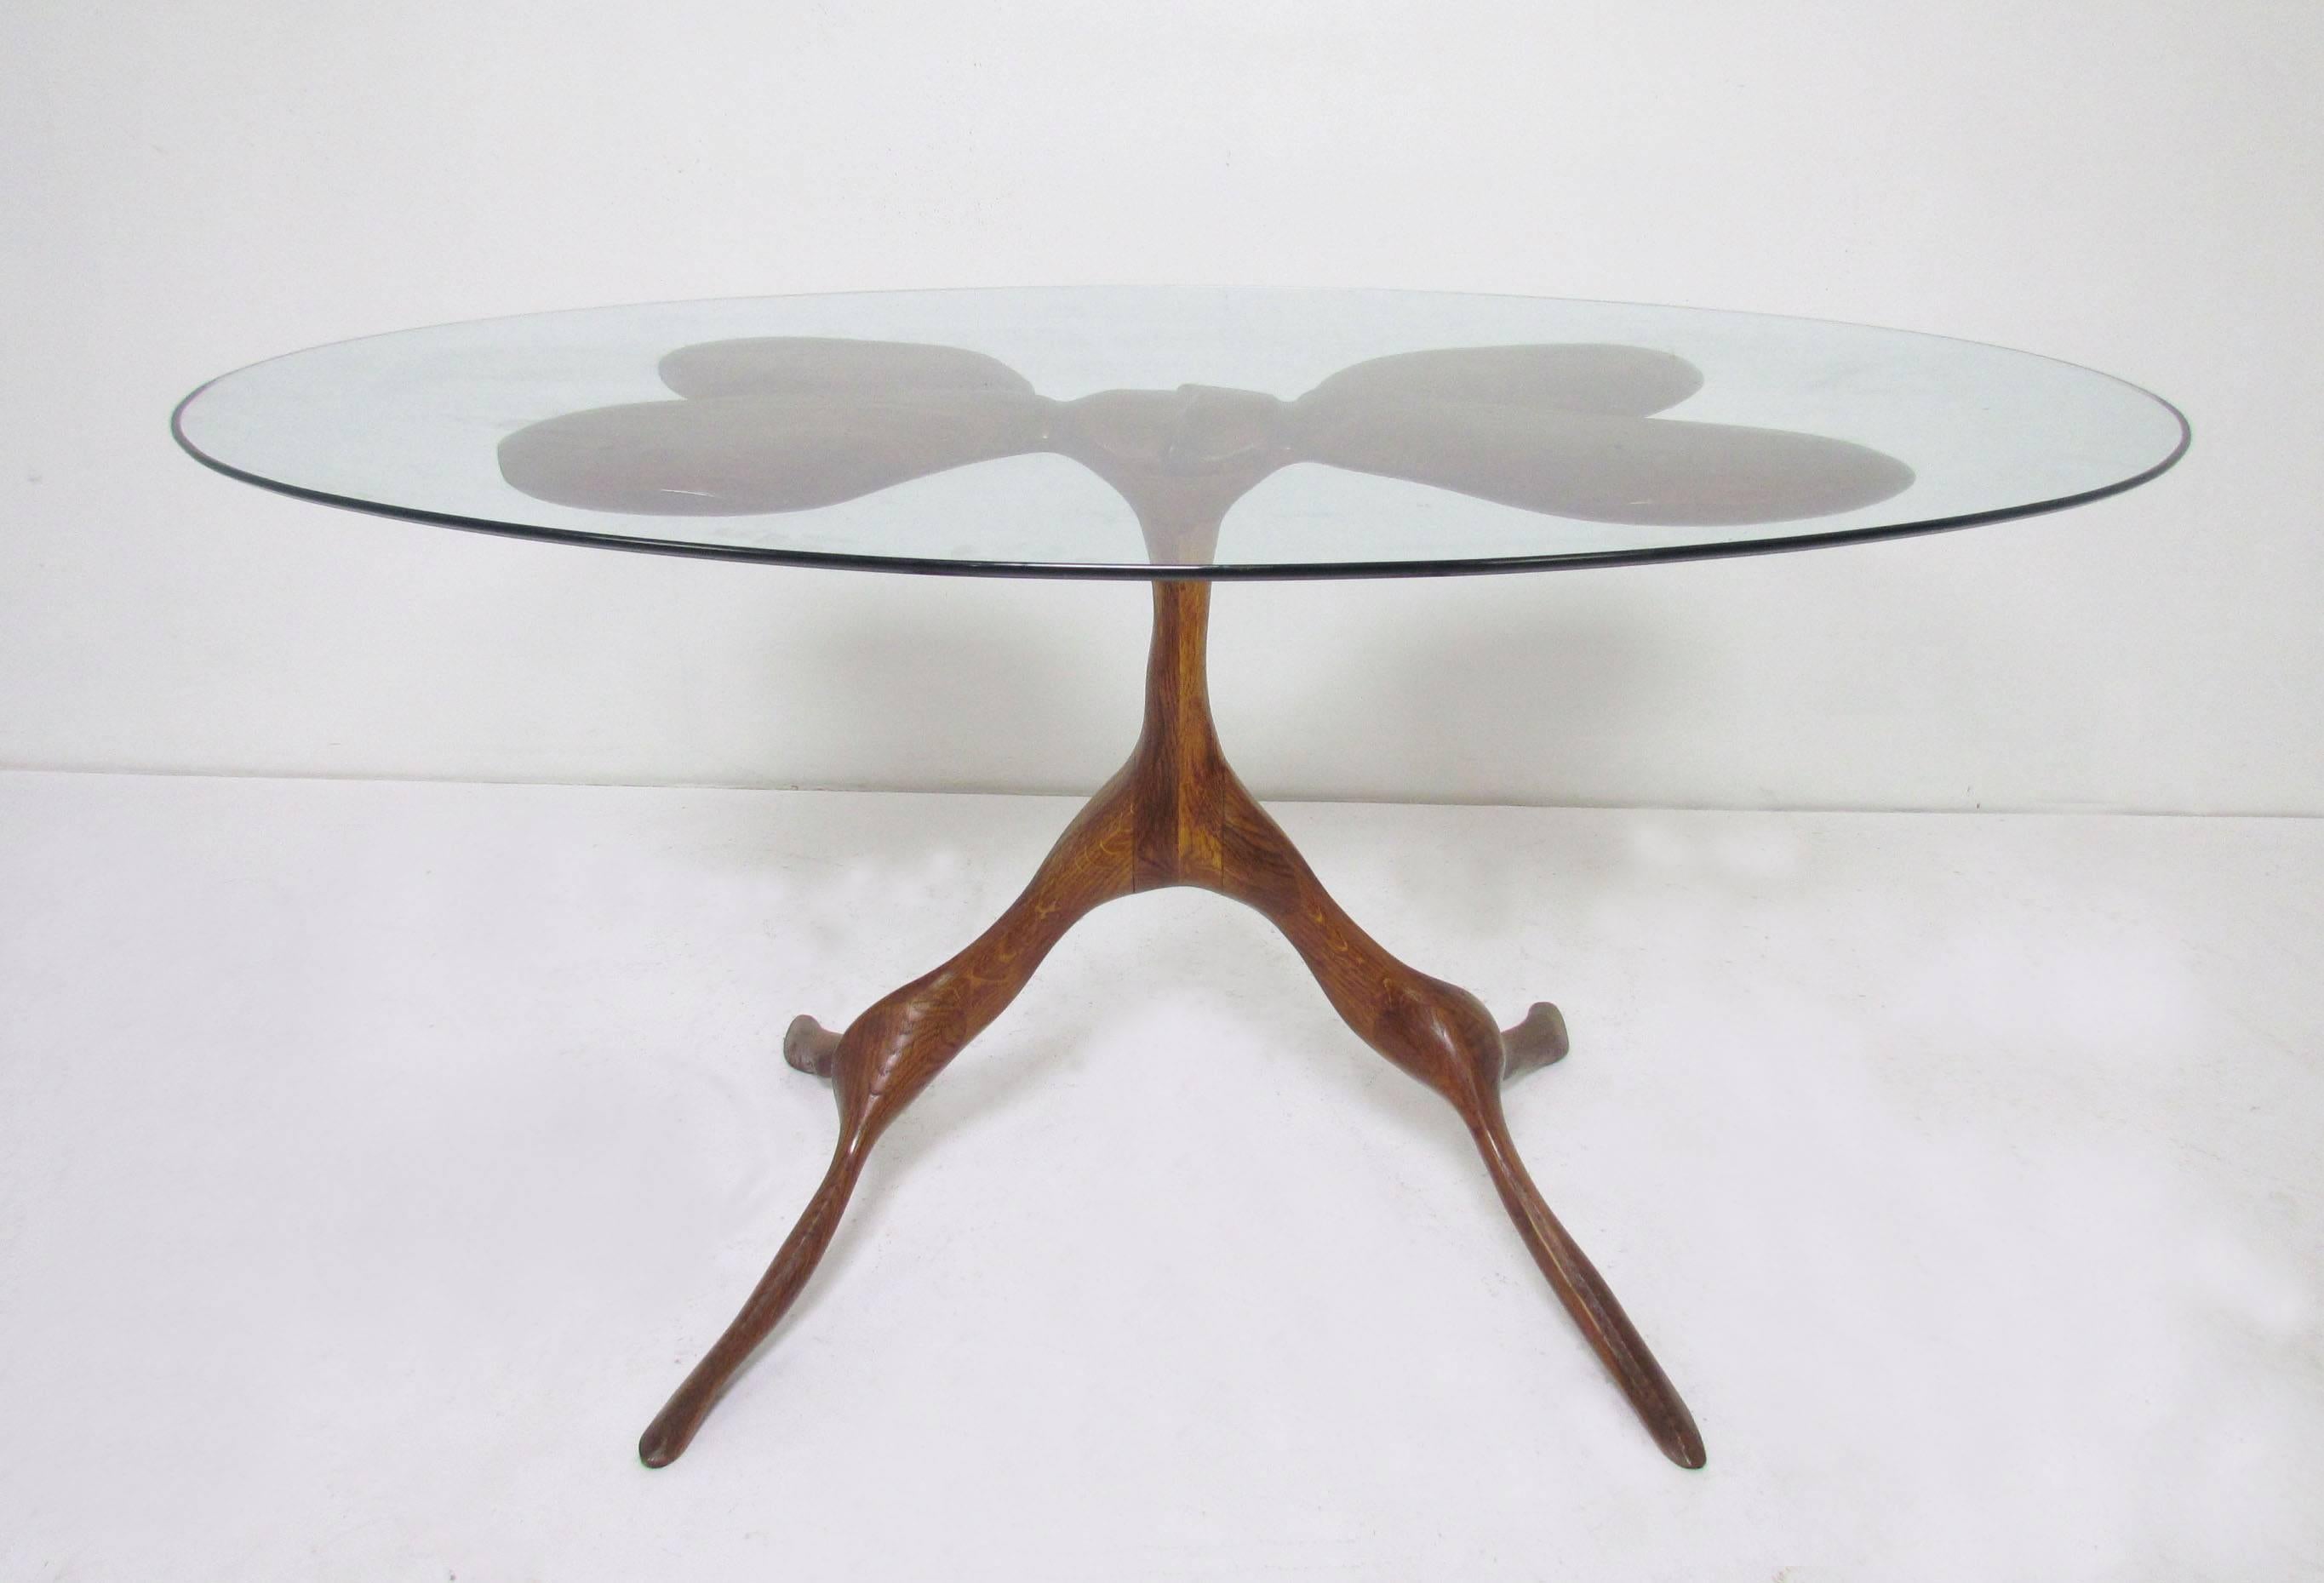 Wood Andrew J. Willner American Studio Craft Modernist Table, Dated 1973